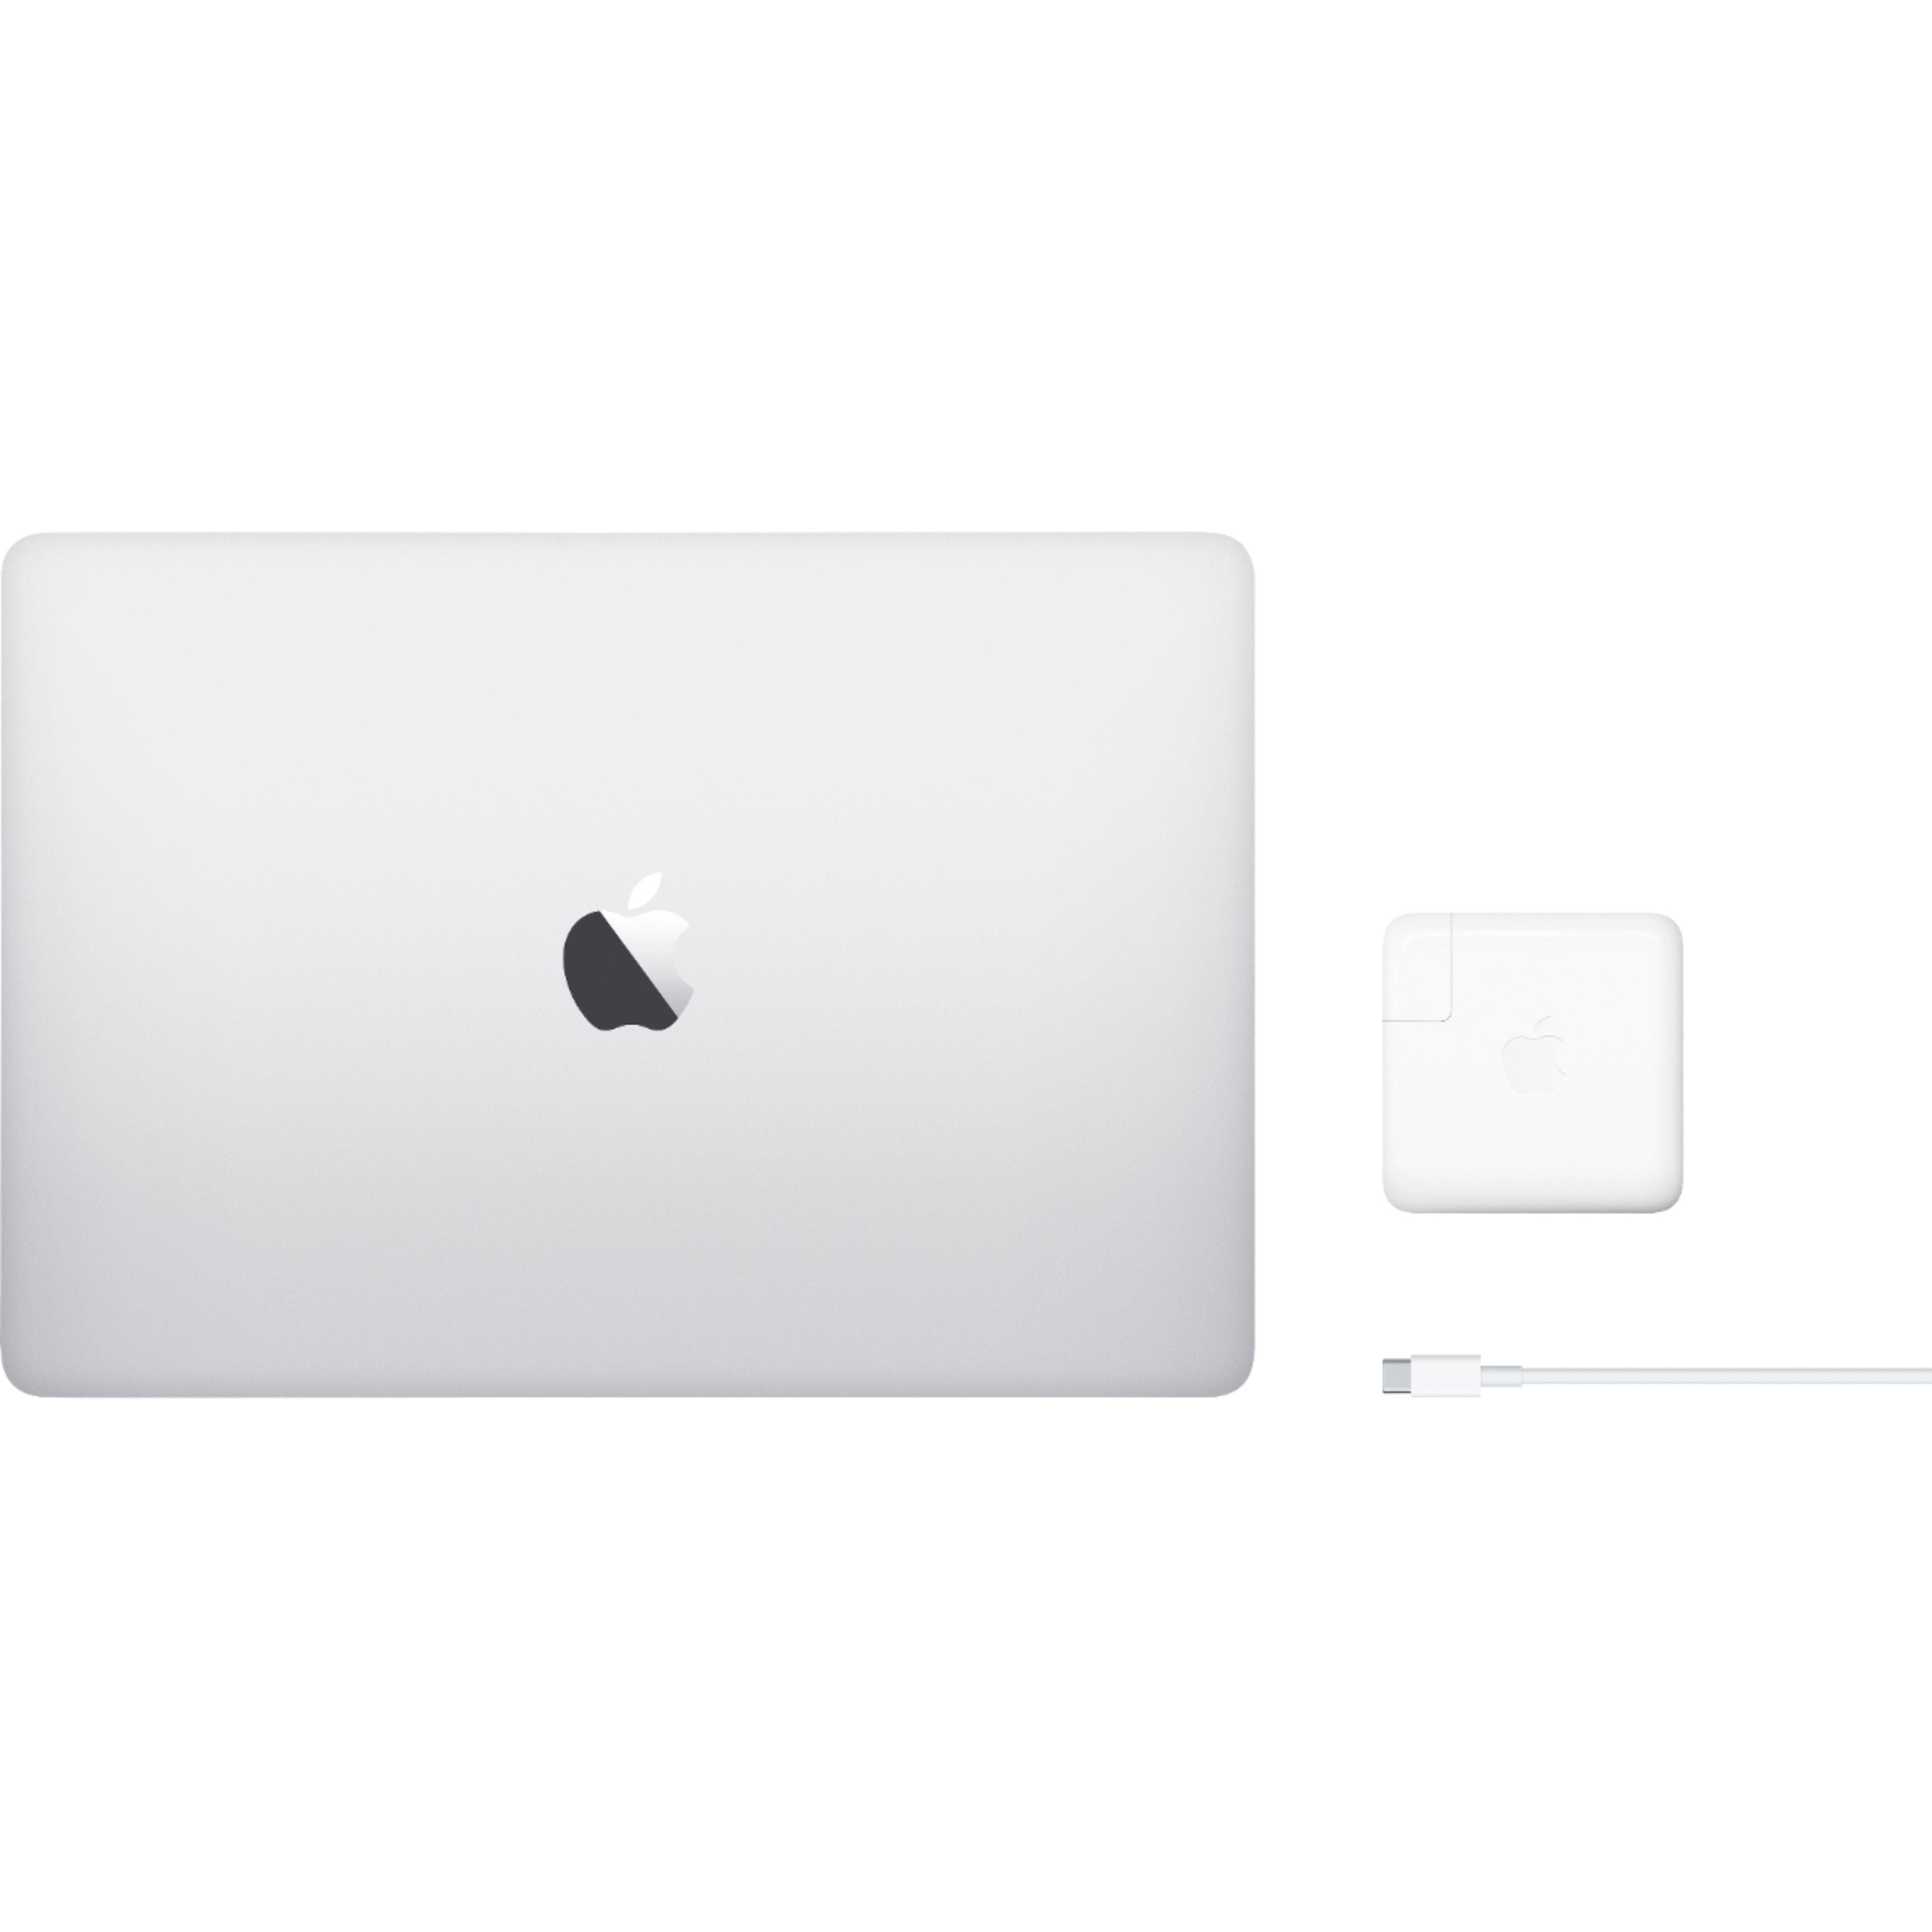 Apple MacBook Pro 13.3'' MUHQ2LL/A (2019) Intel Core i5, 8GB RAM, 128GB SSD, Silver - Refurbished Excellent